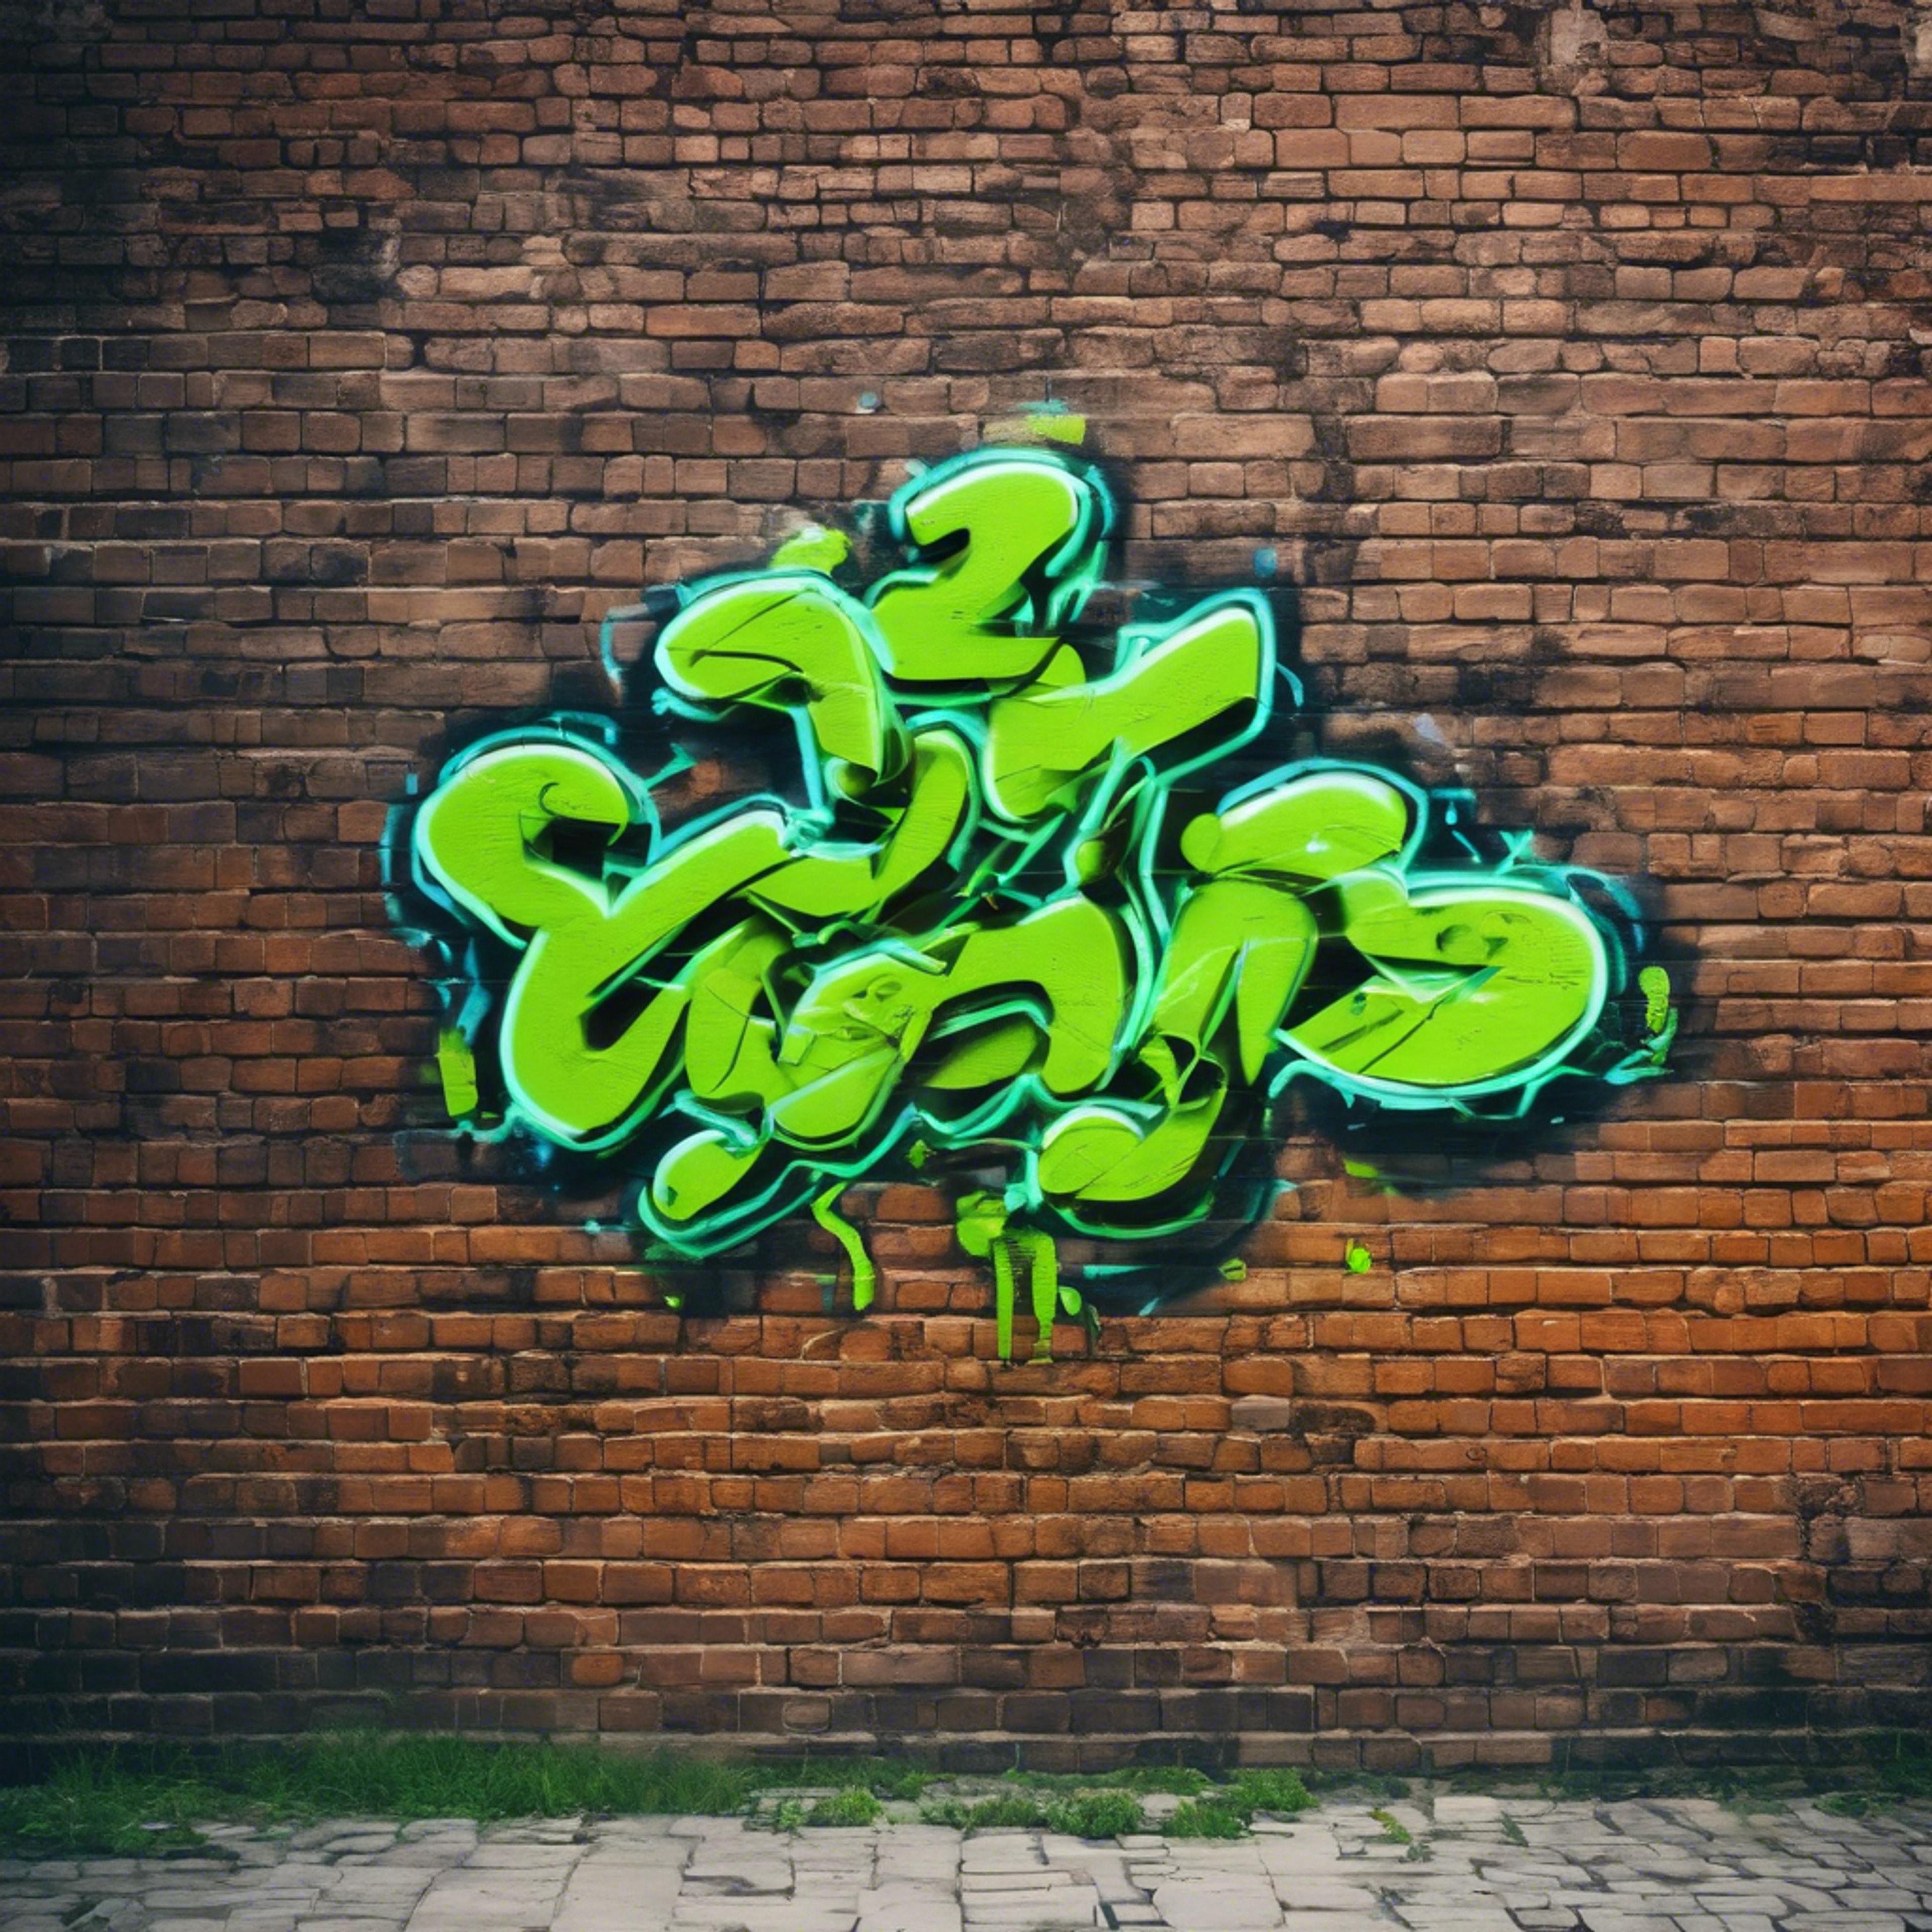 Cool neon green graffiti on an old brick wall in an urban setting. Tapet[8032604dbabf4a1691c6]